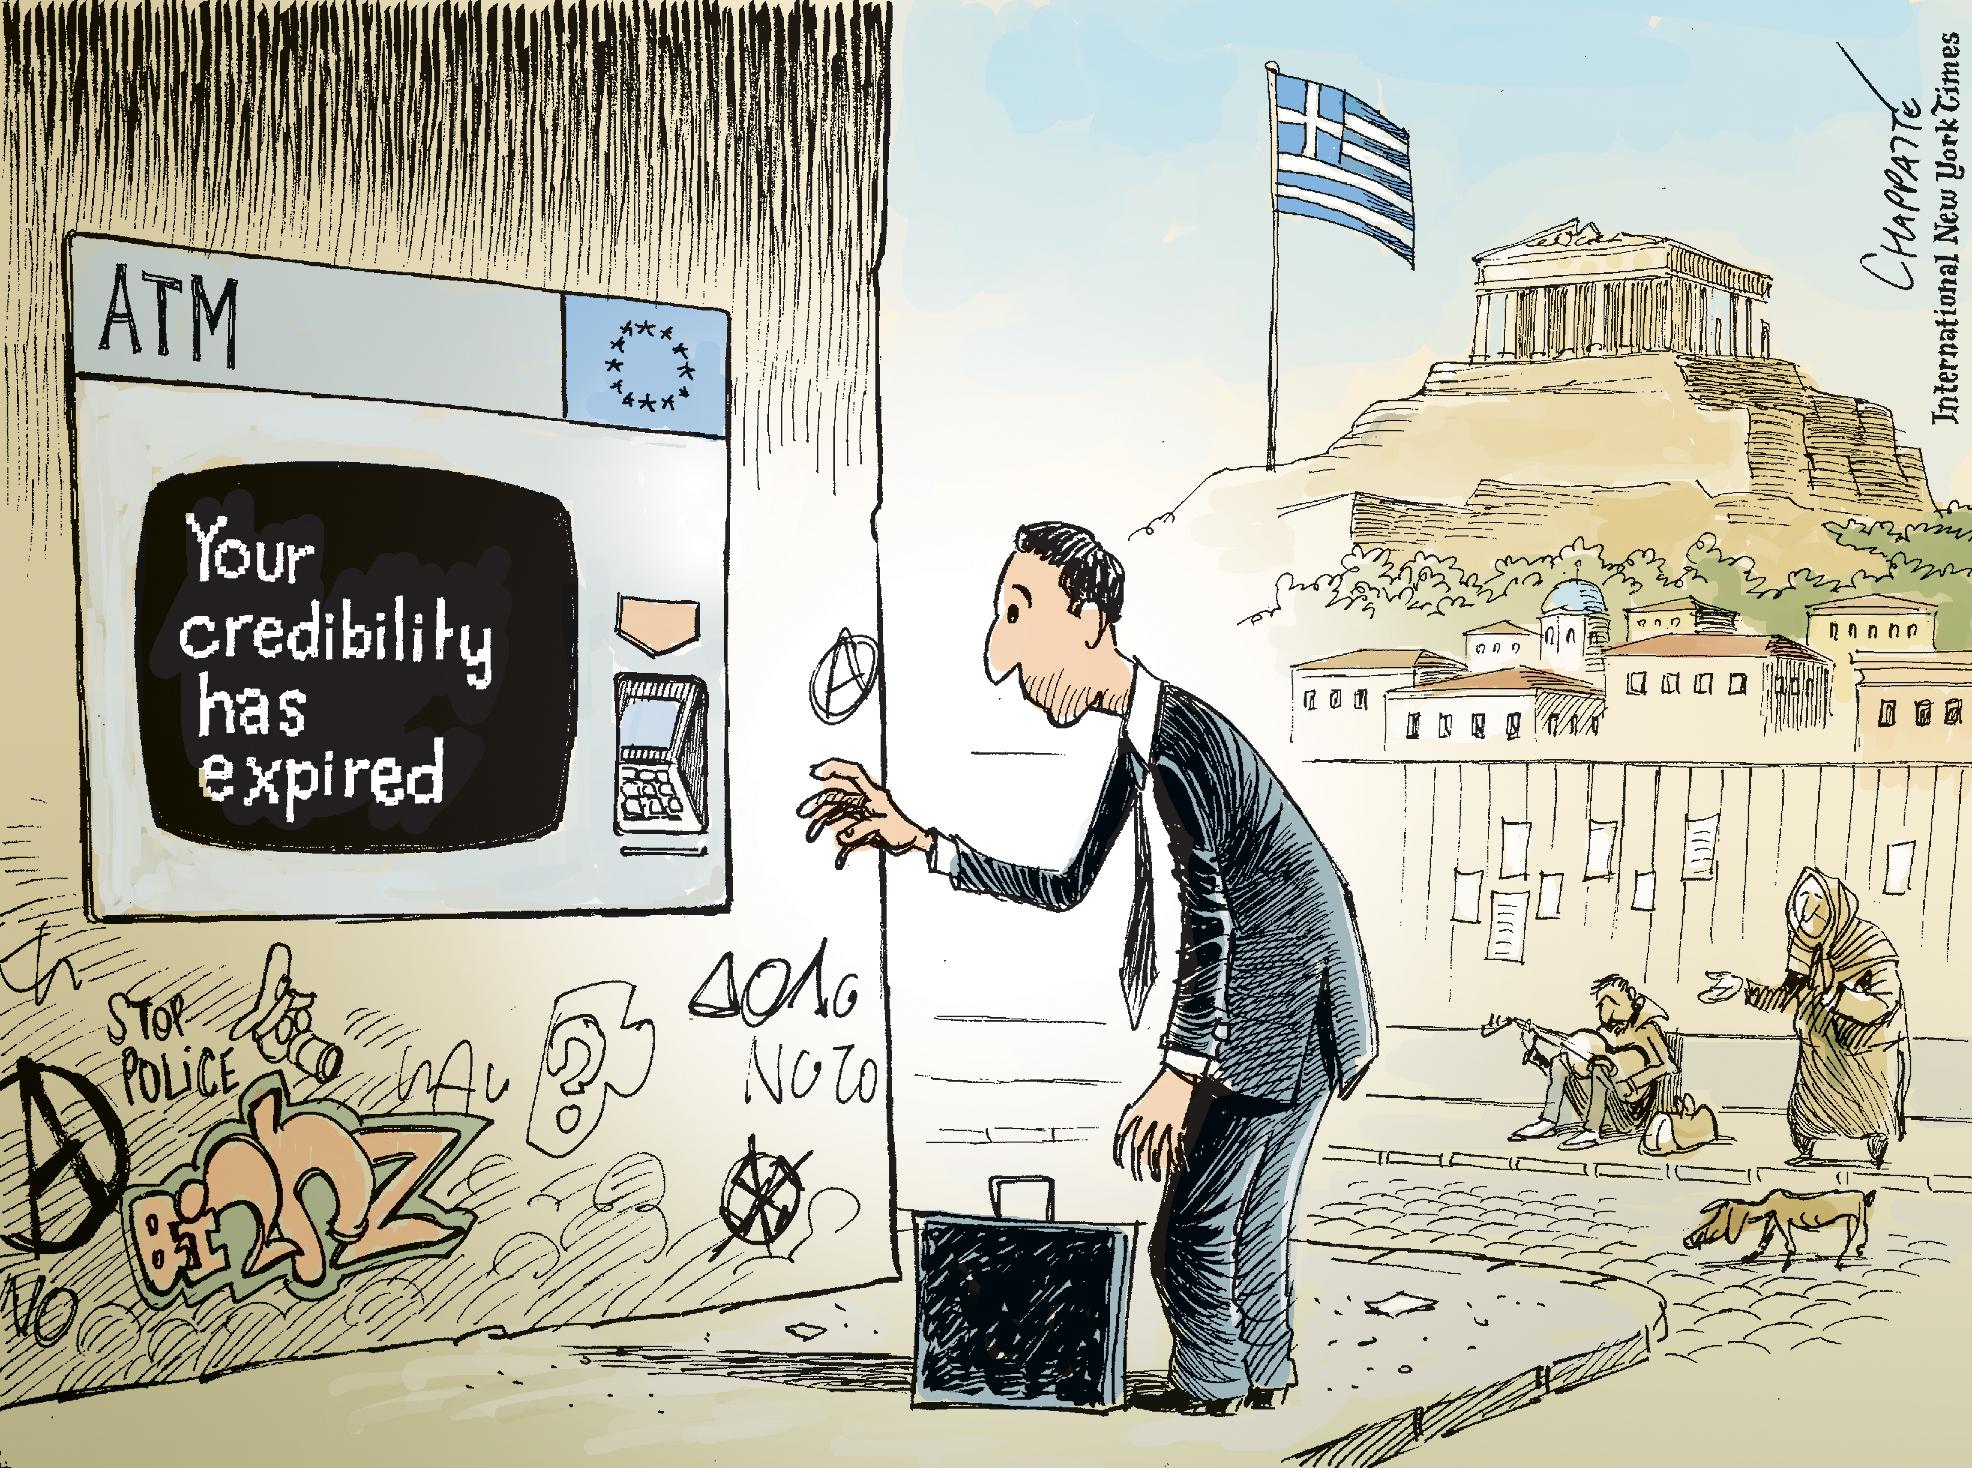 Greece in debt